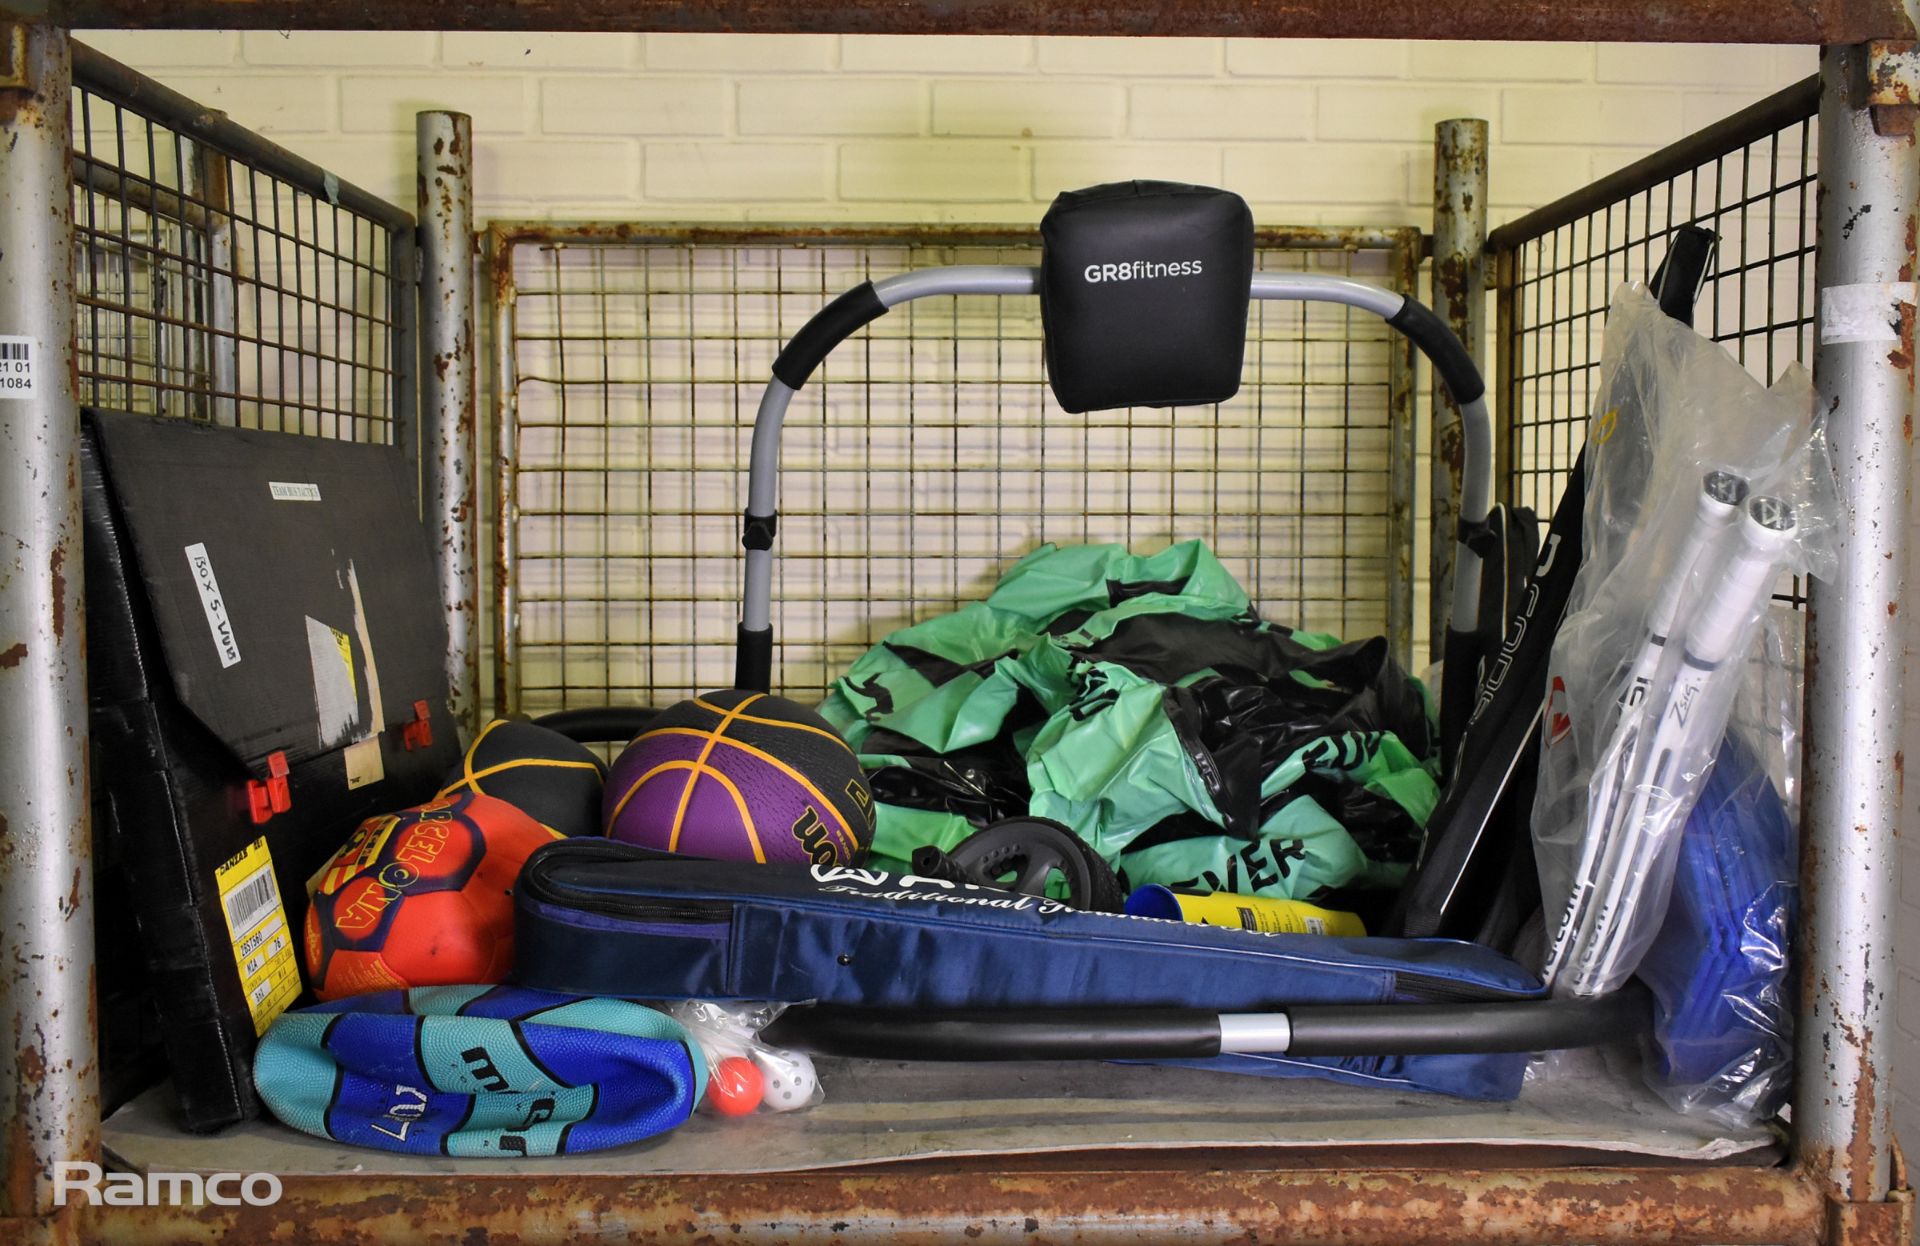 Sport exercise equipment - Tennis/badminton racket, dumbell, rounders set, various balls, inflatable